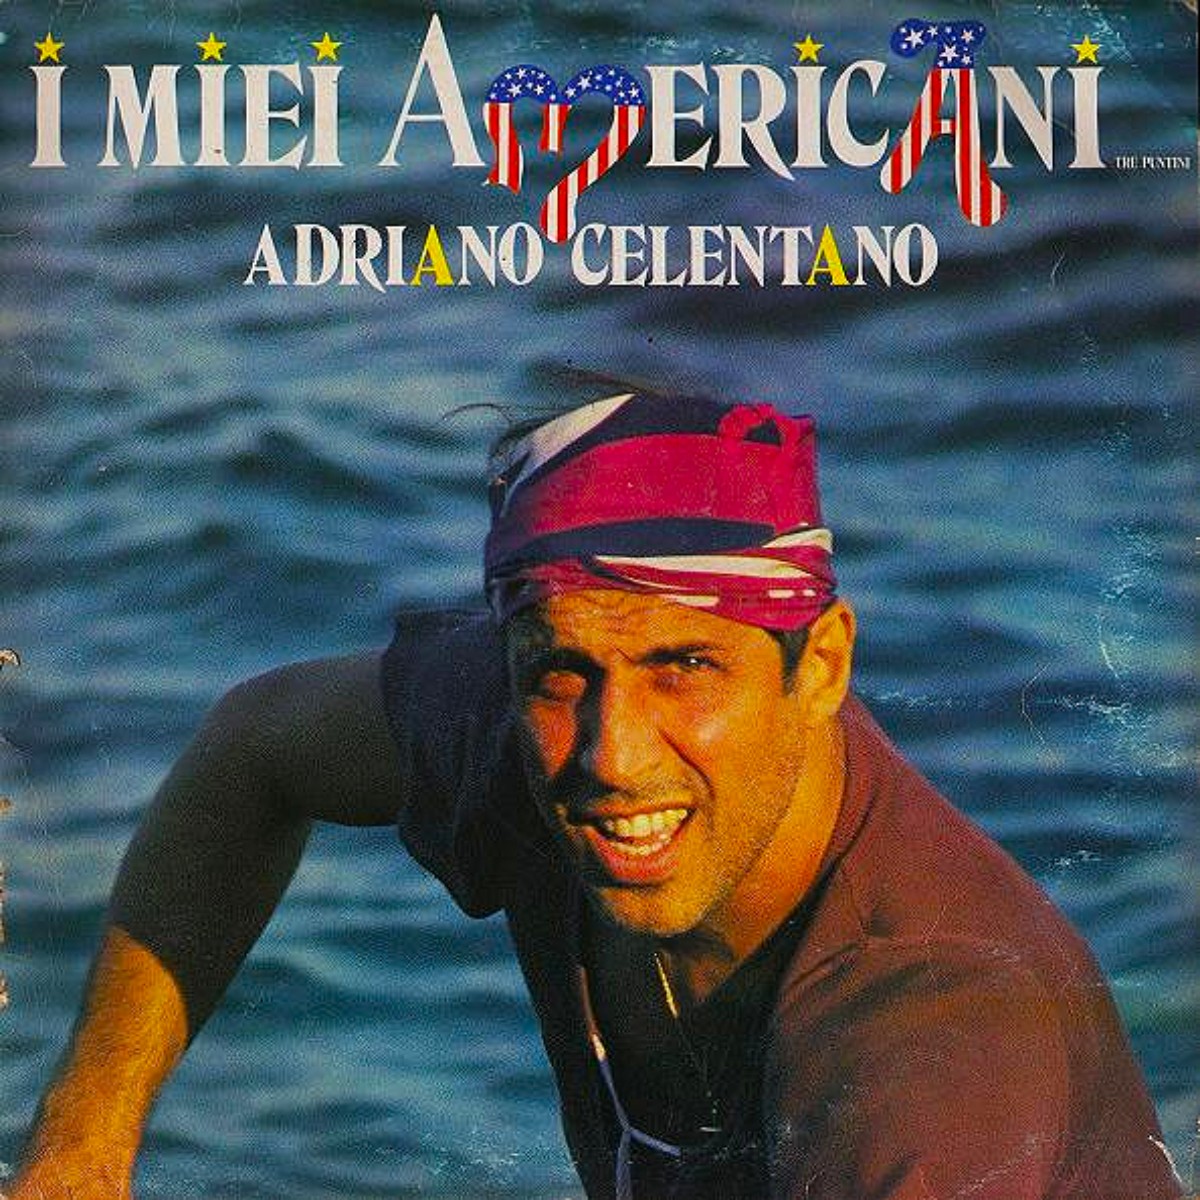 Adriano Celentano, I miei americani (Je suis américain)